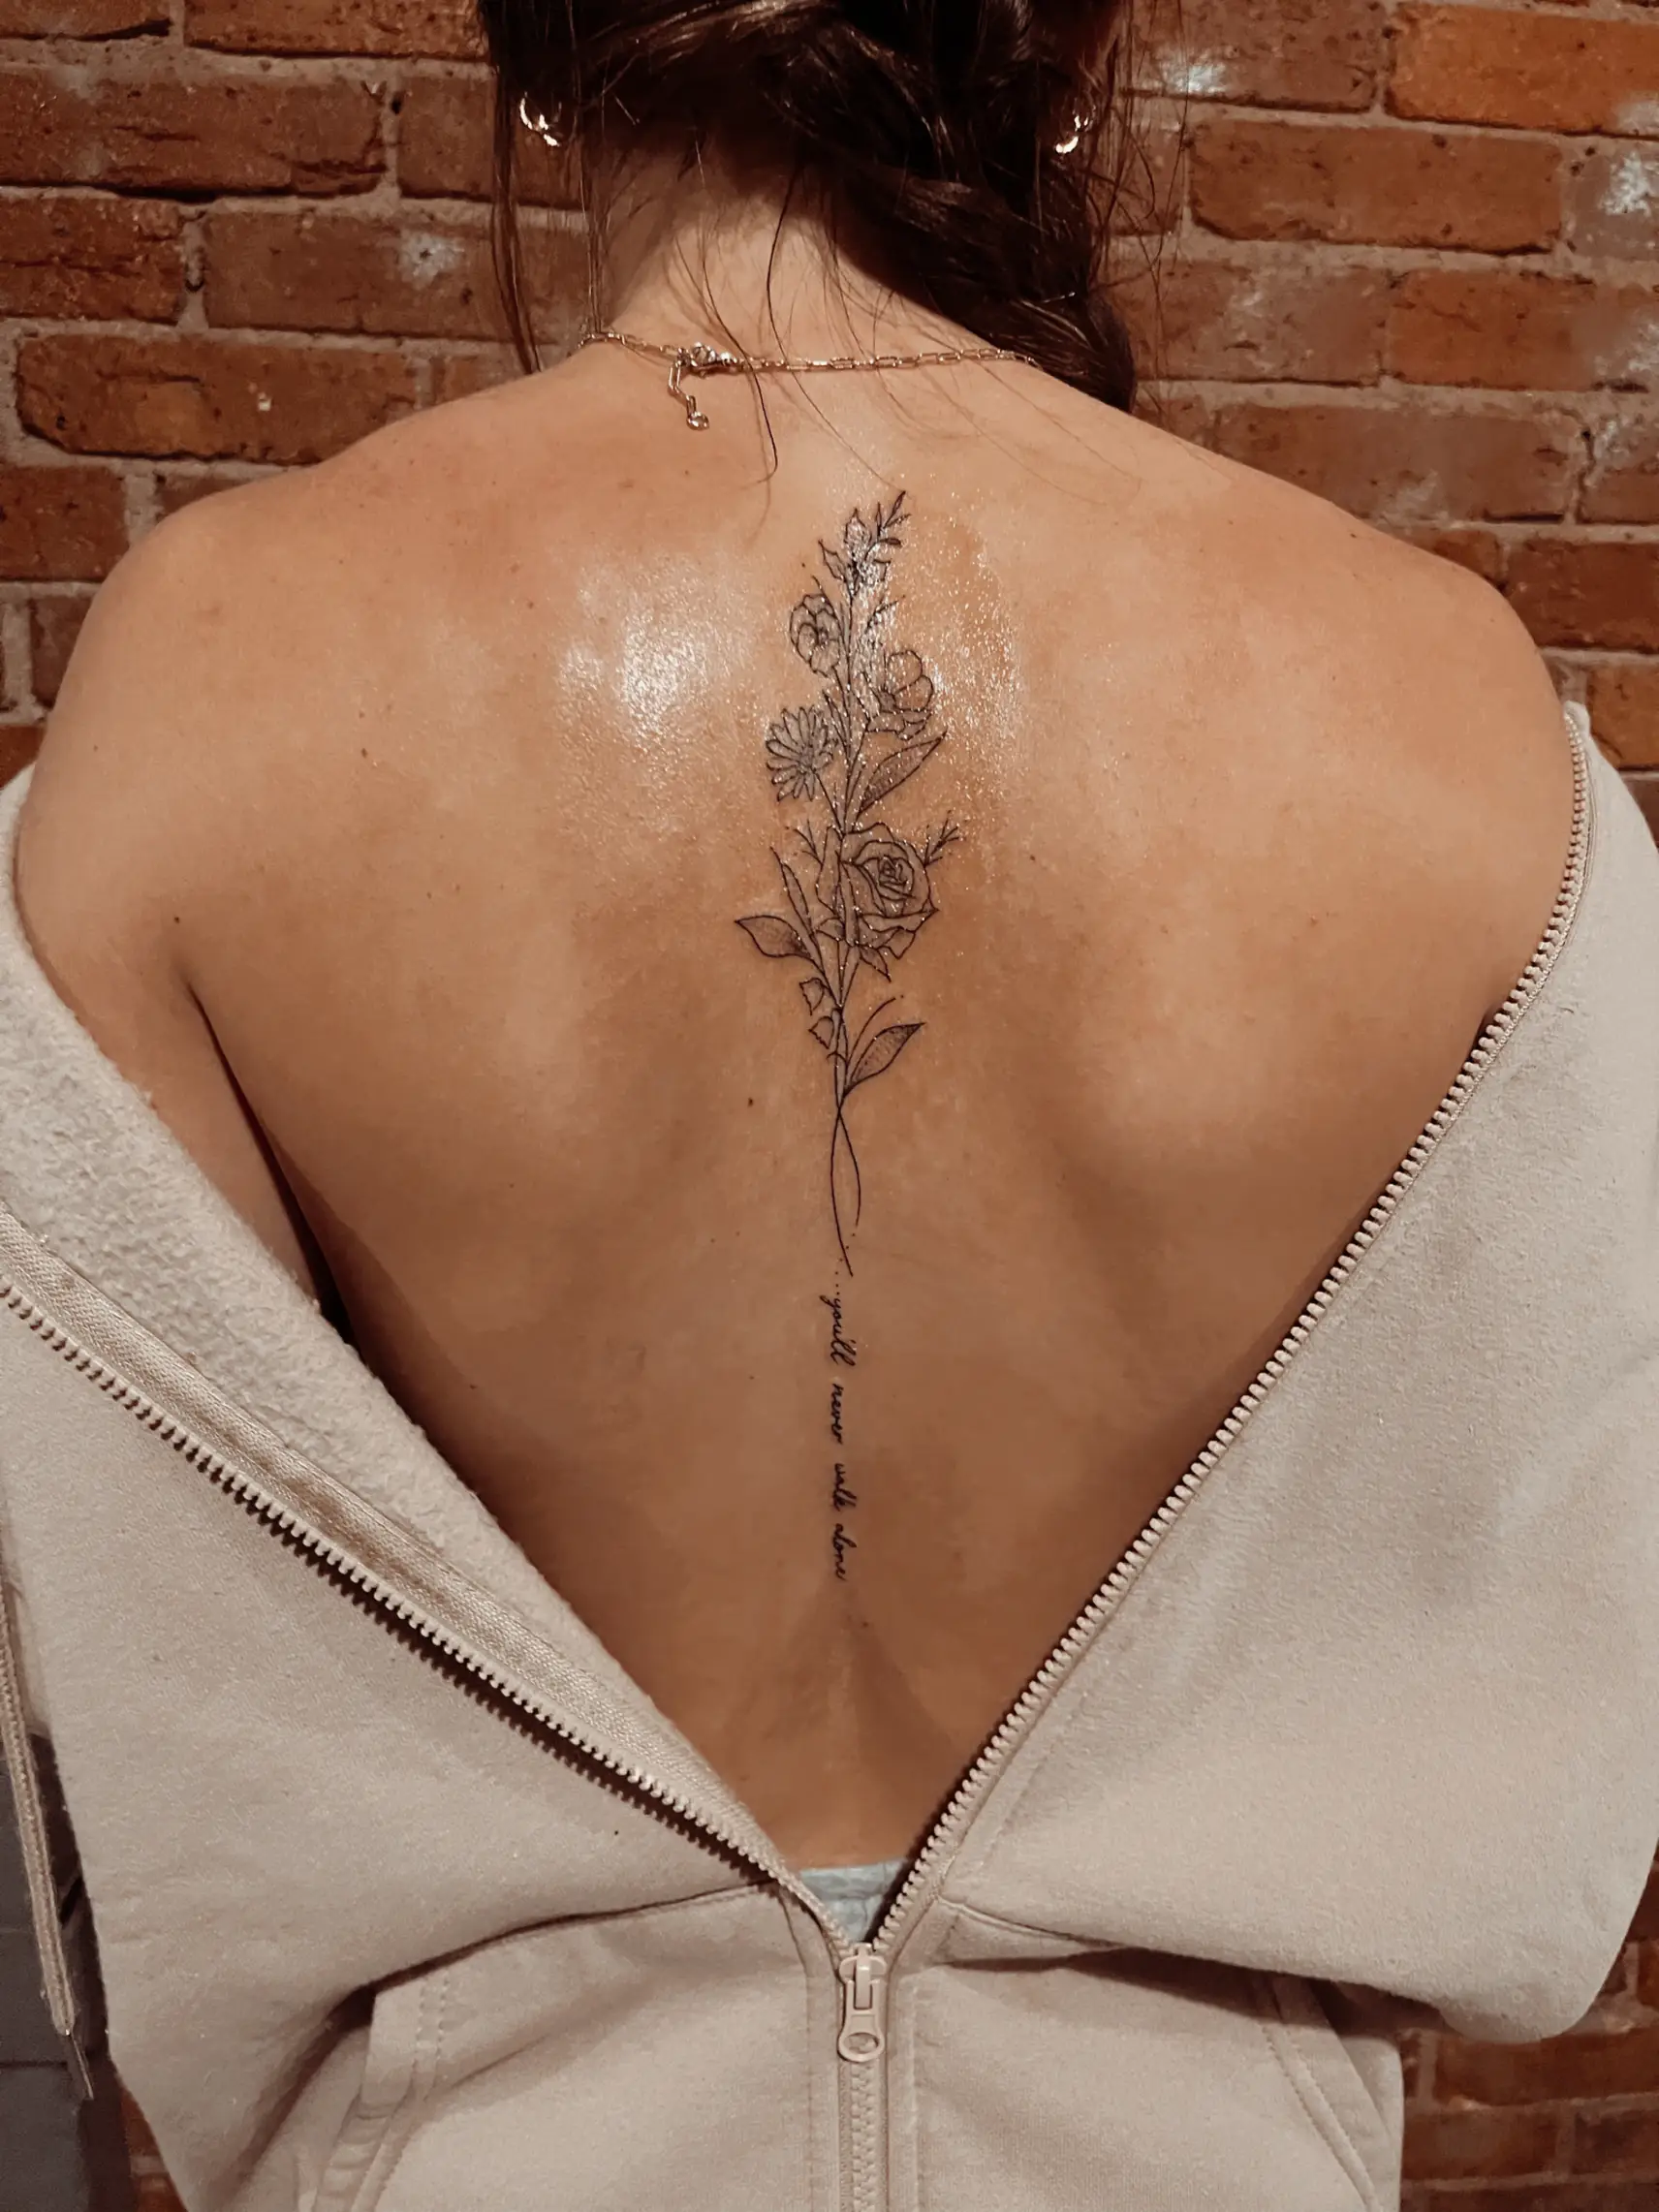 Upper Back Tattoo Ideas for Women